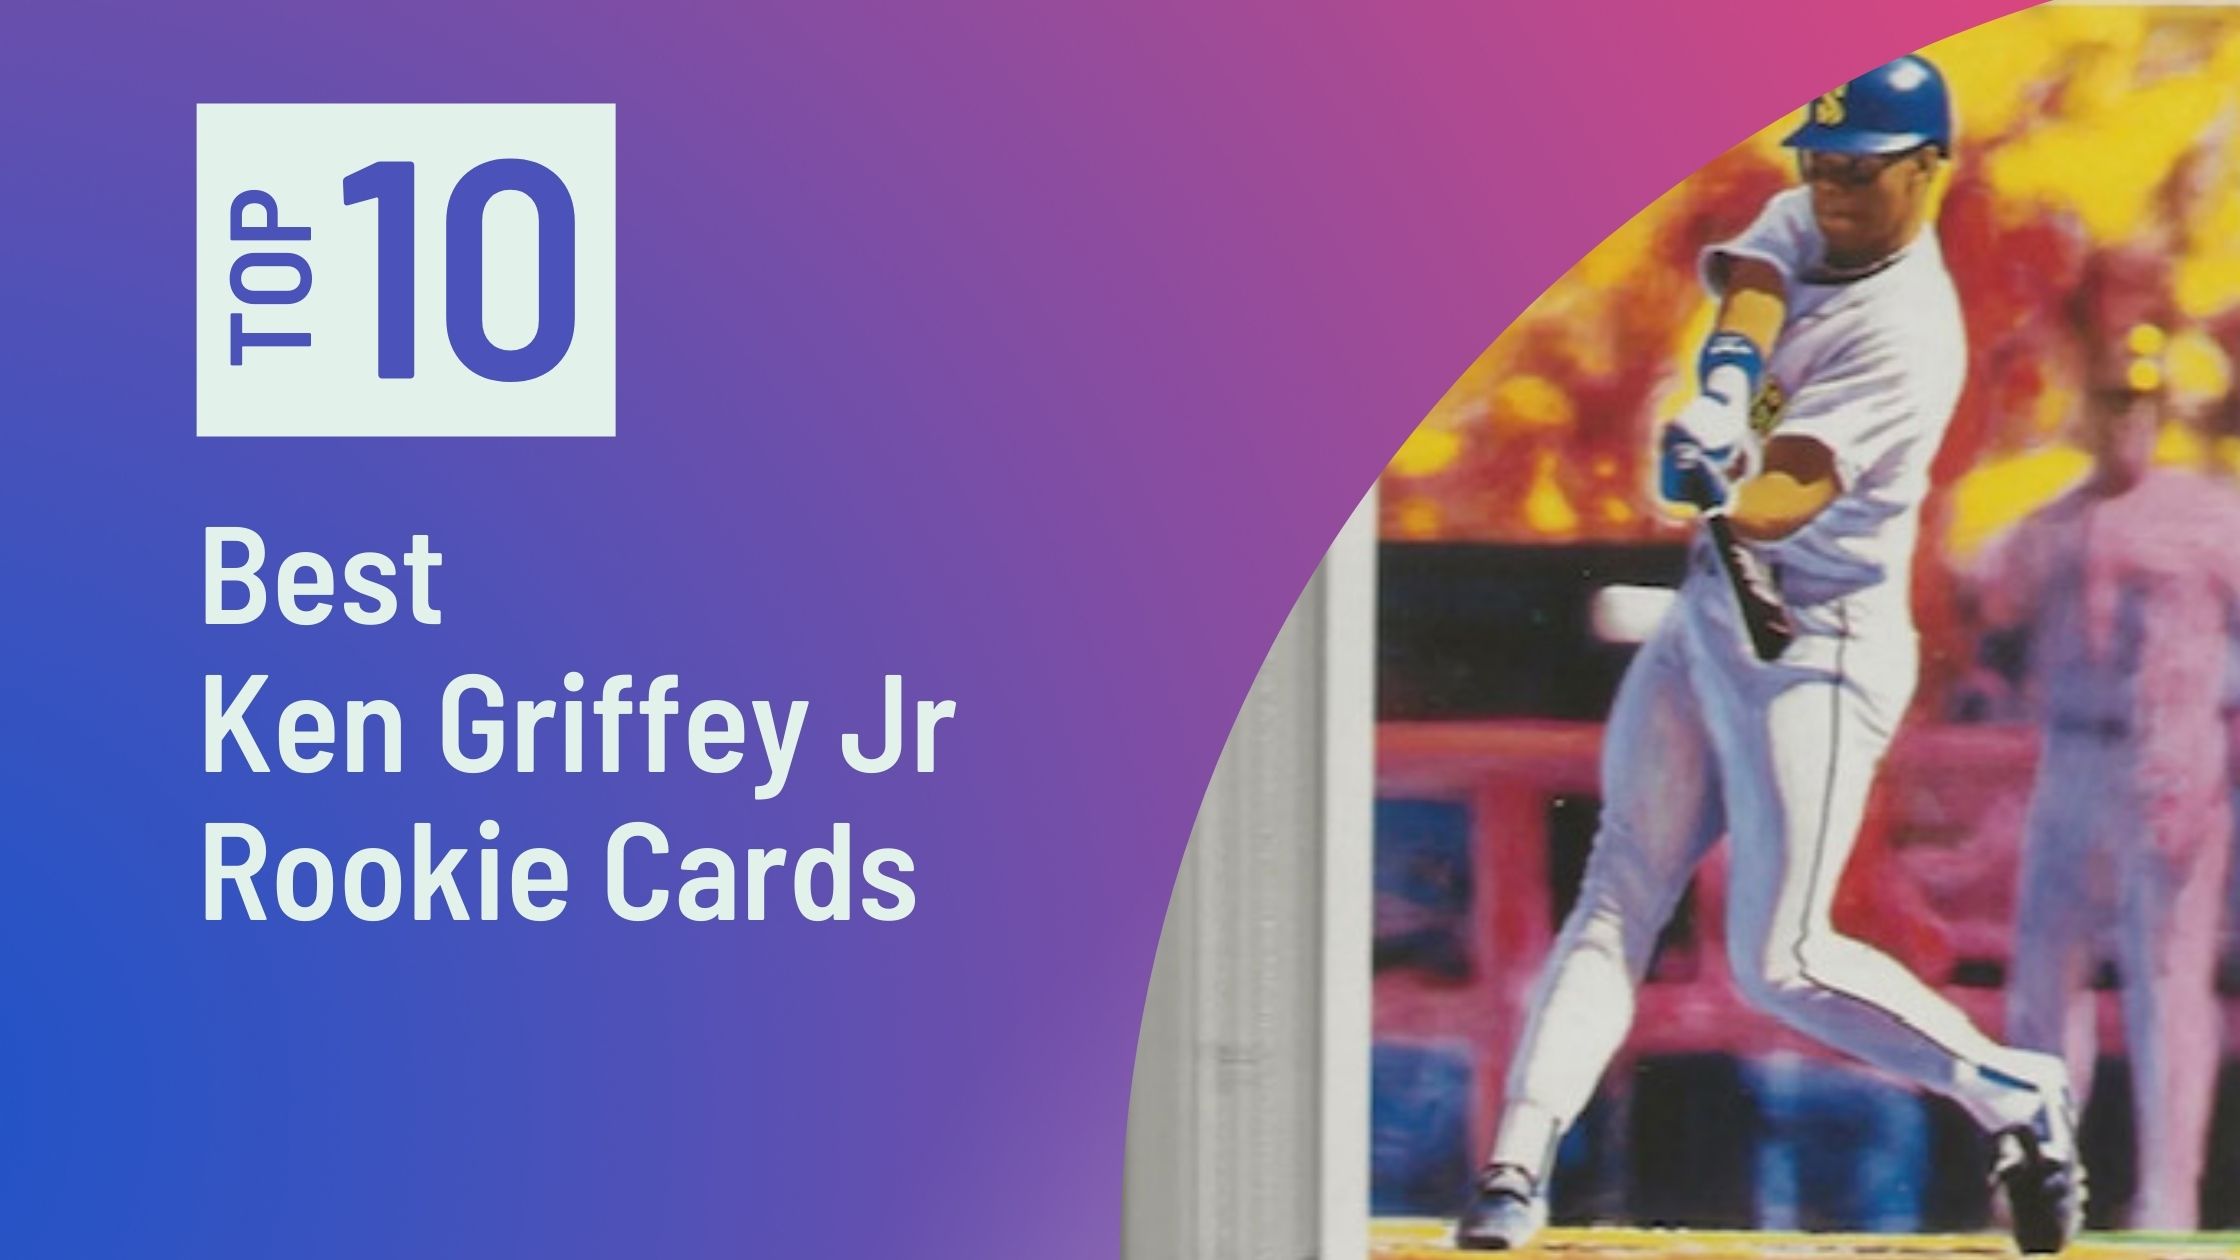 Photo of Best Ken Griffey Jr Rookie Cards